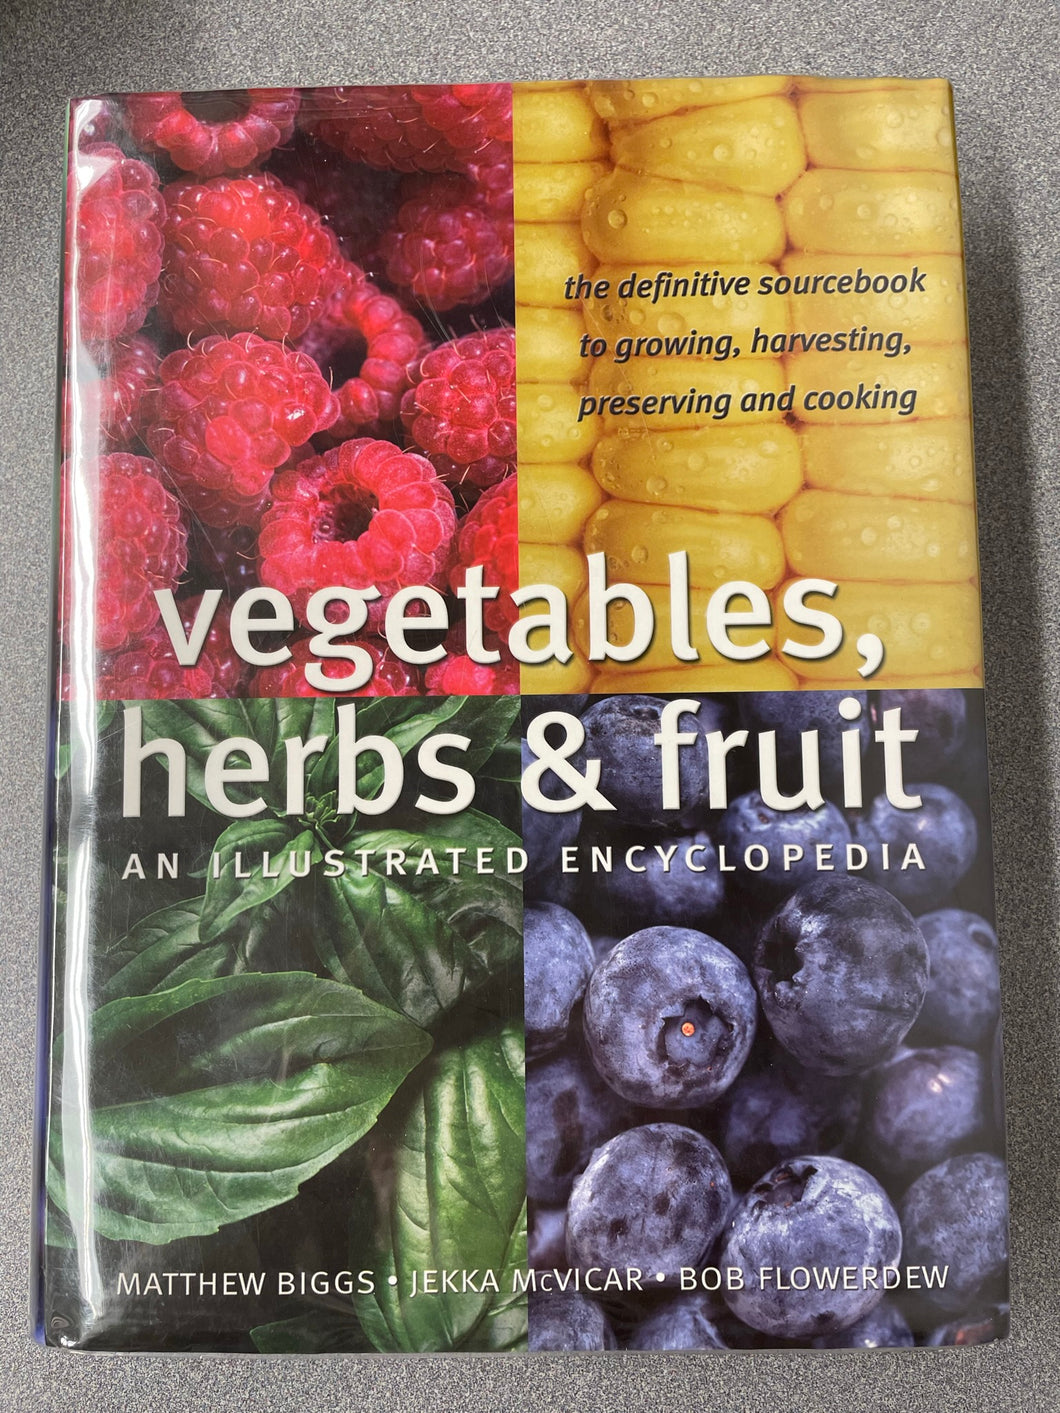 Vegetables, Herbs and Fruit: an Illustrated Encyclopedia, Biggs, Matthew, et al [2006] G 9/23